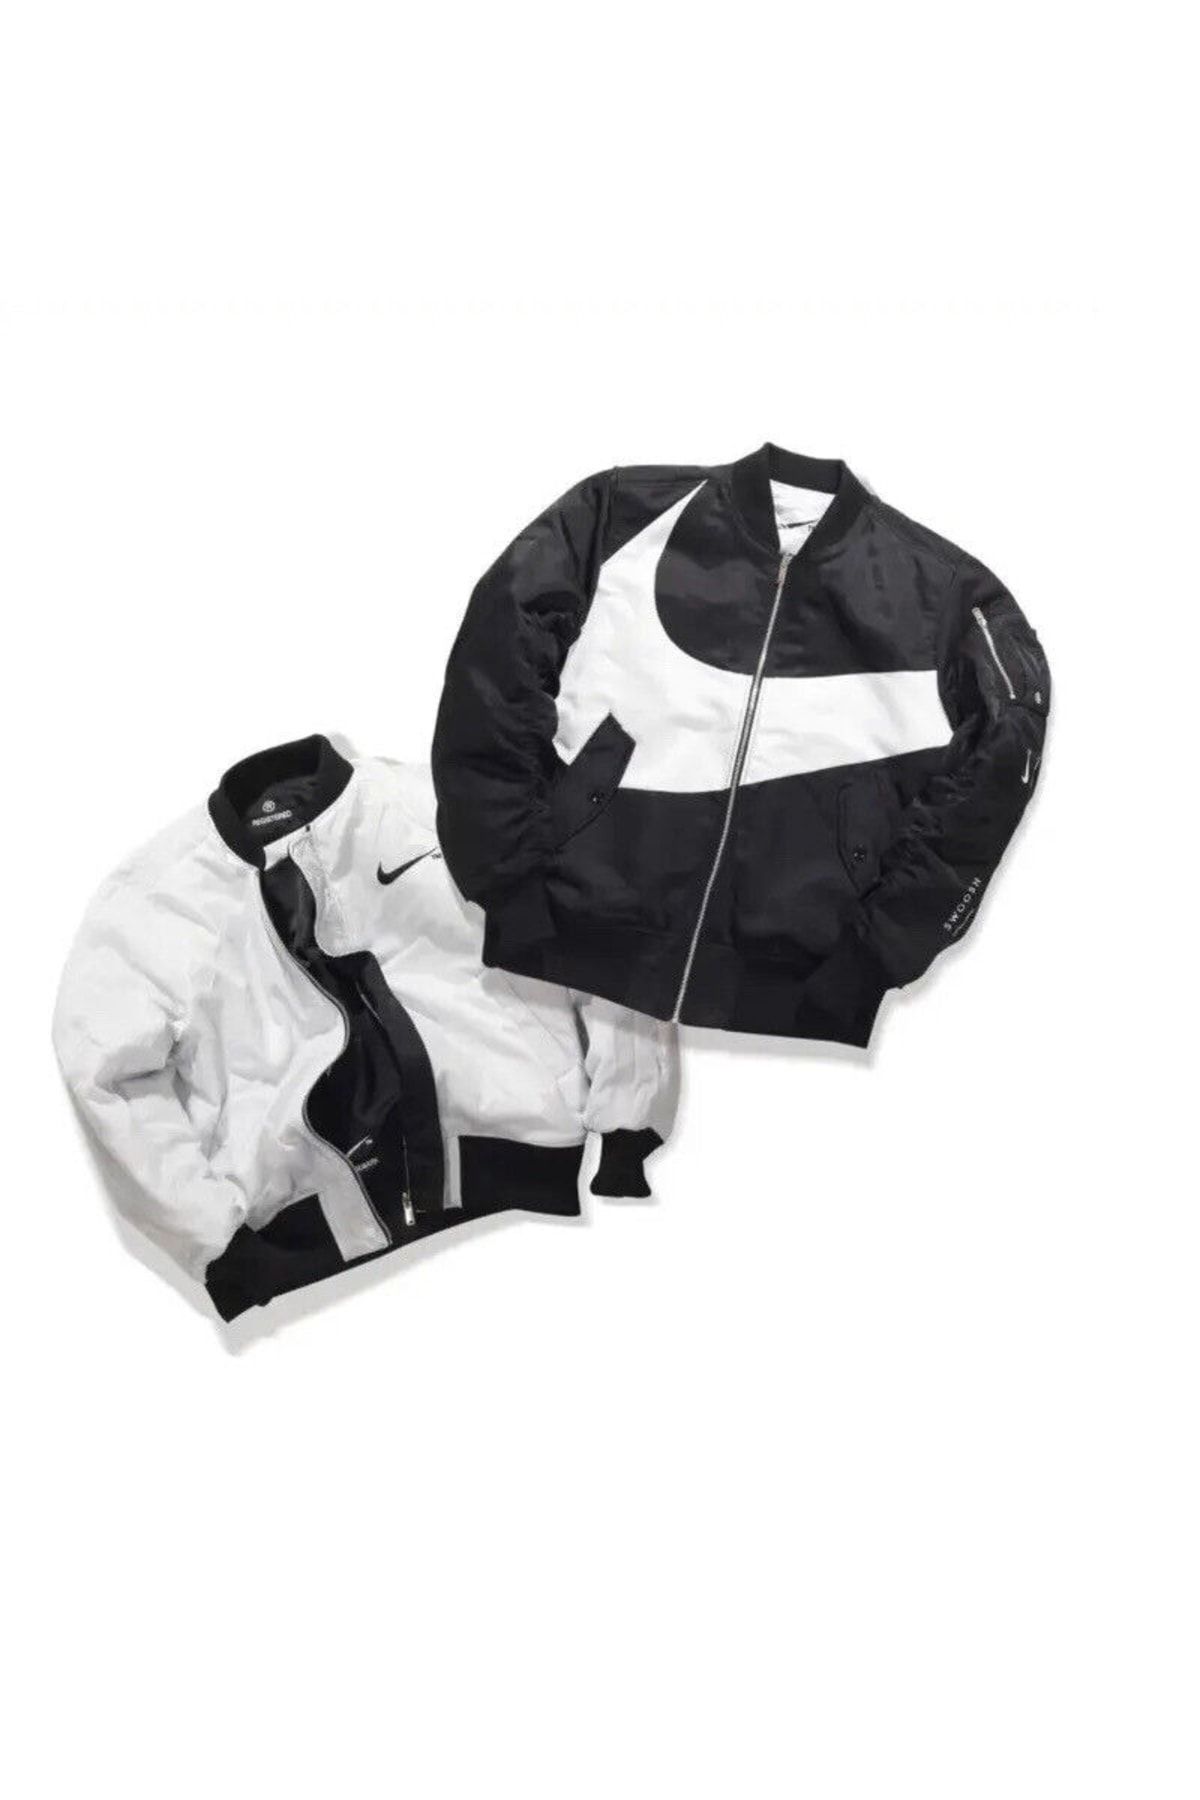 Nike Windrunner Sportswear Jacket Women's SZ XS Black/White BQ4715-011 NWT  | eBay